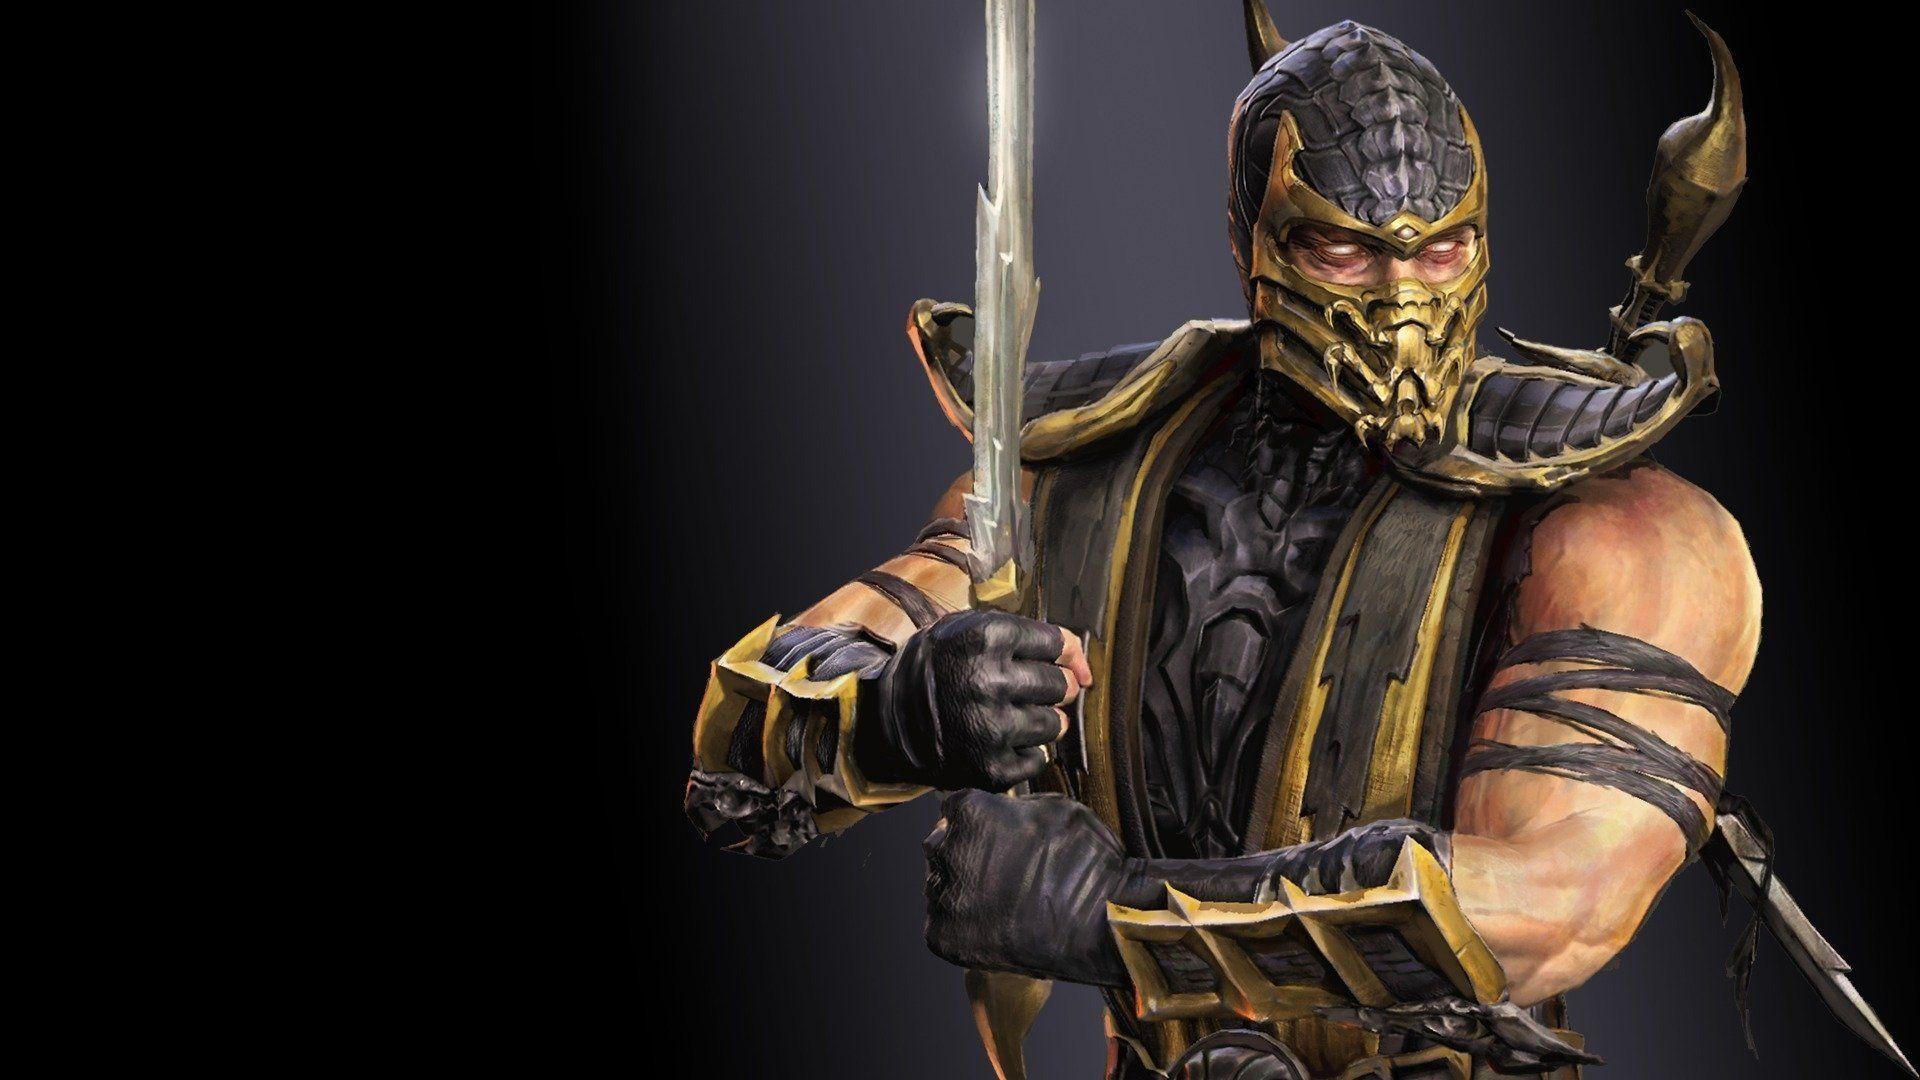 Scorpion Mortal Kombat Wallpapers Top Free Scorpion Mortal Kombat Backgrounds Wallpaperaccess